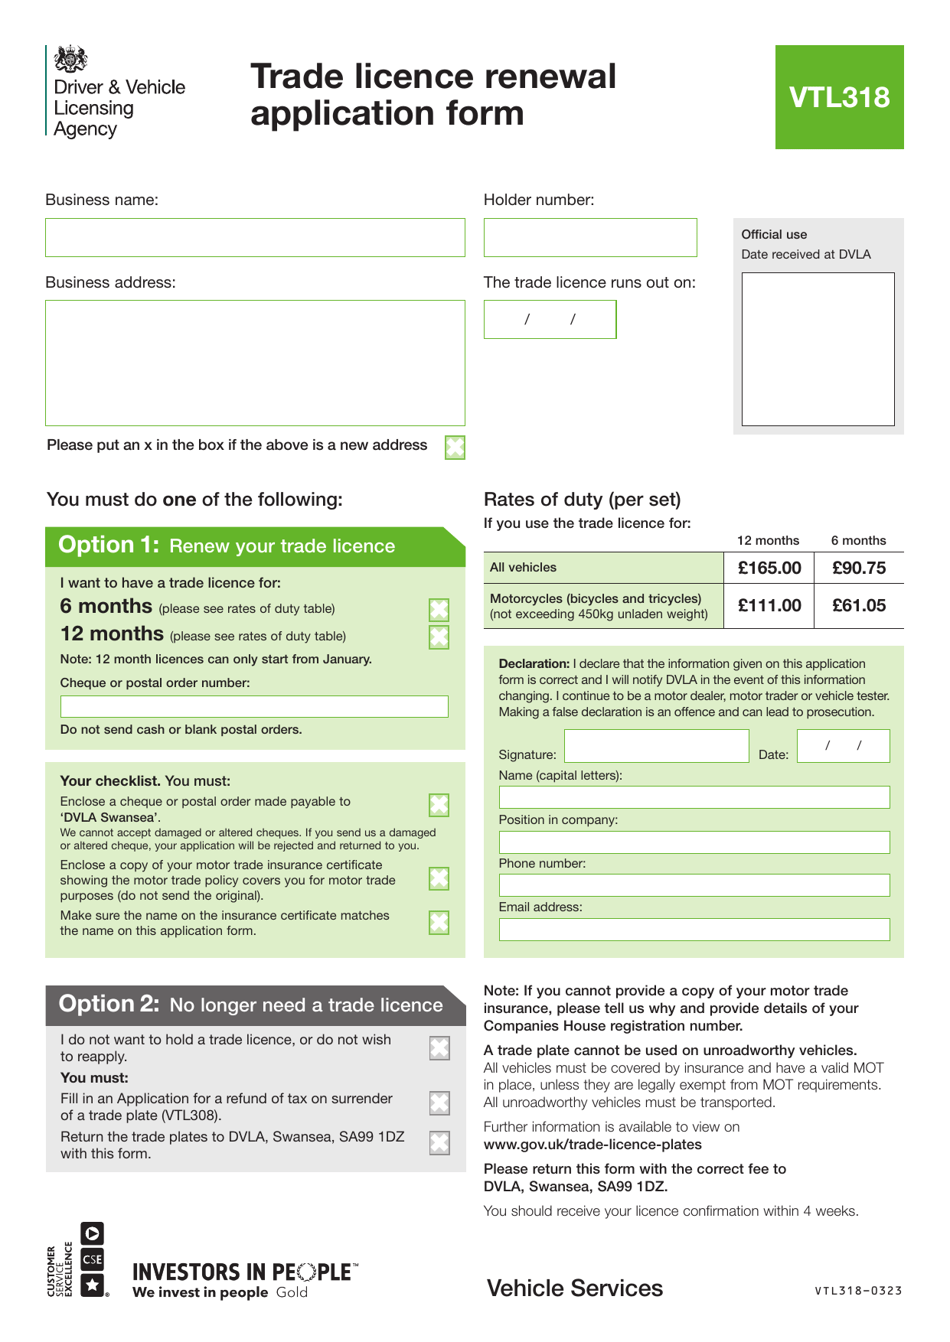 Form VTL318 Trade Licence Renewal Application Form - United Kingdom, Page 1